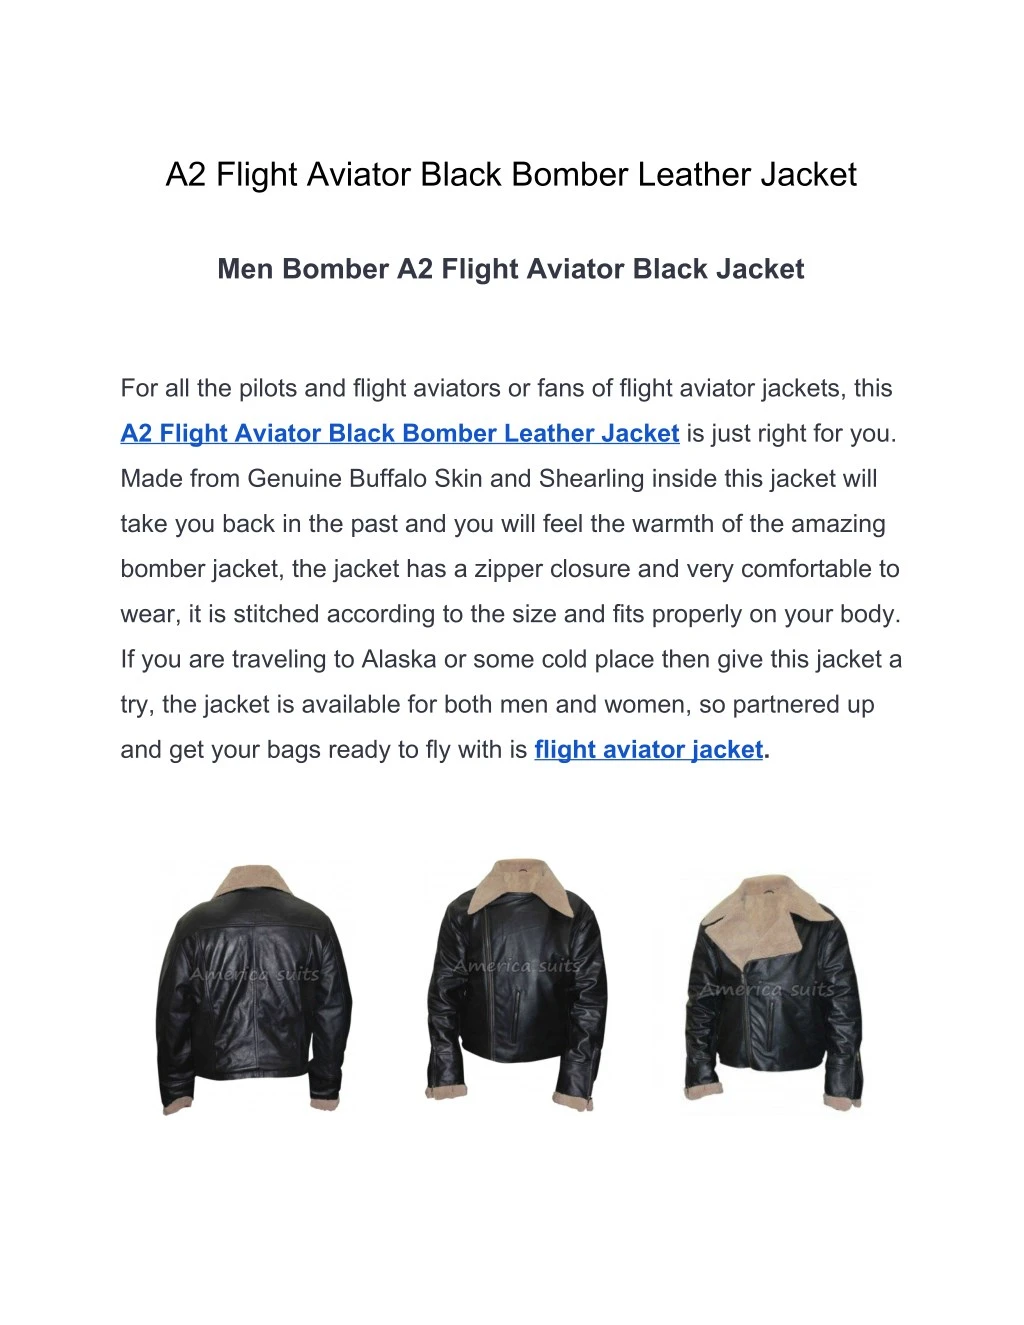 a2 flight aviator black bomber leather jacket